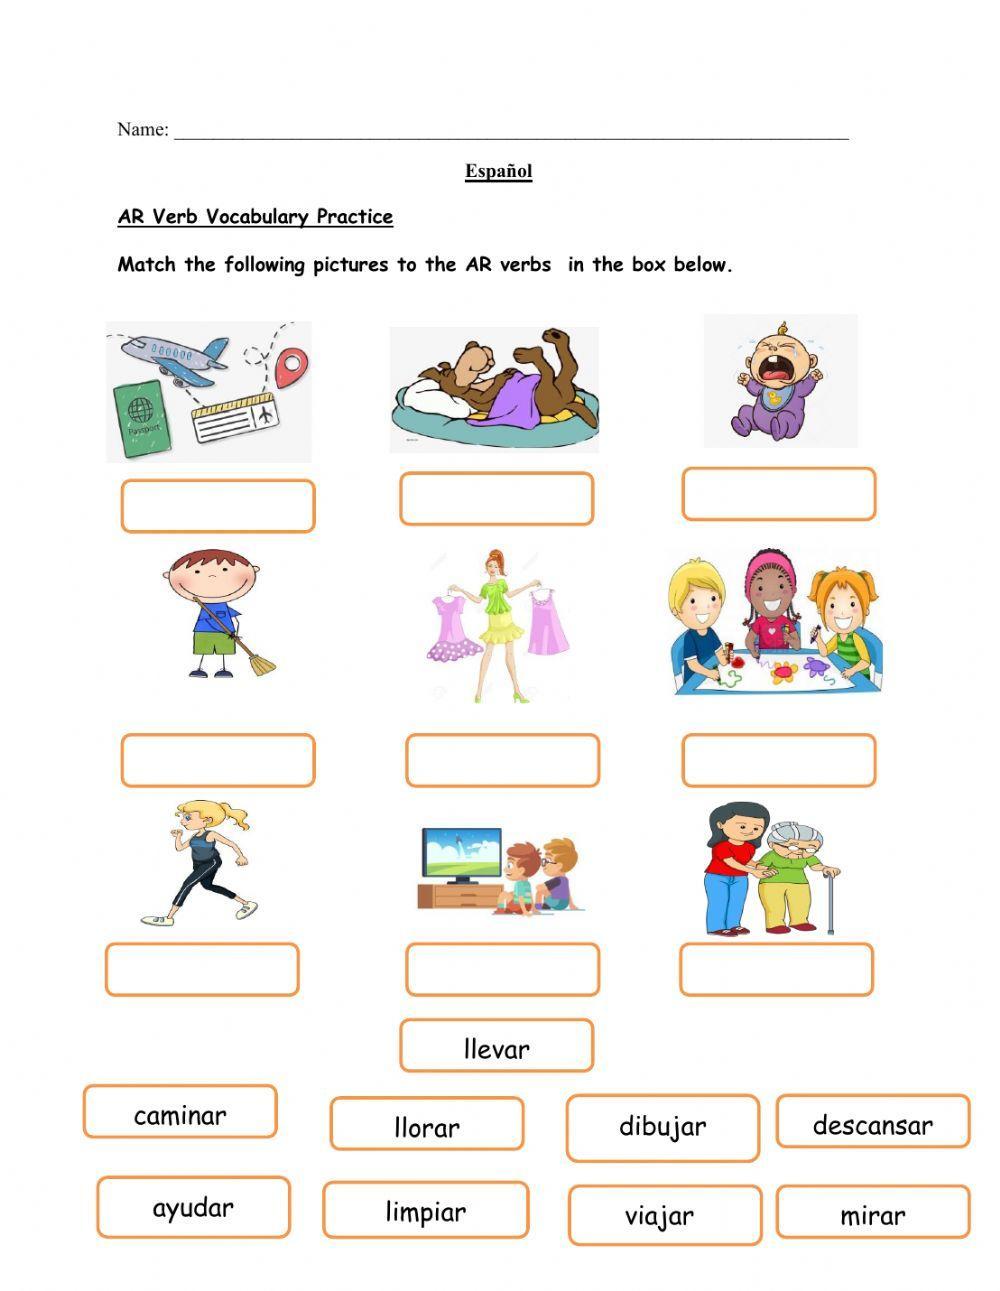 Spanish AR verb practice exercise